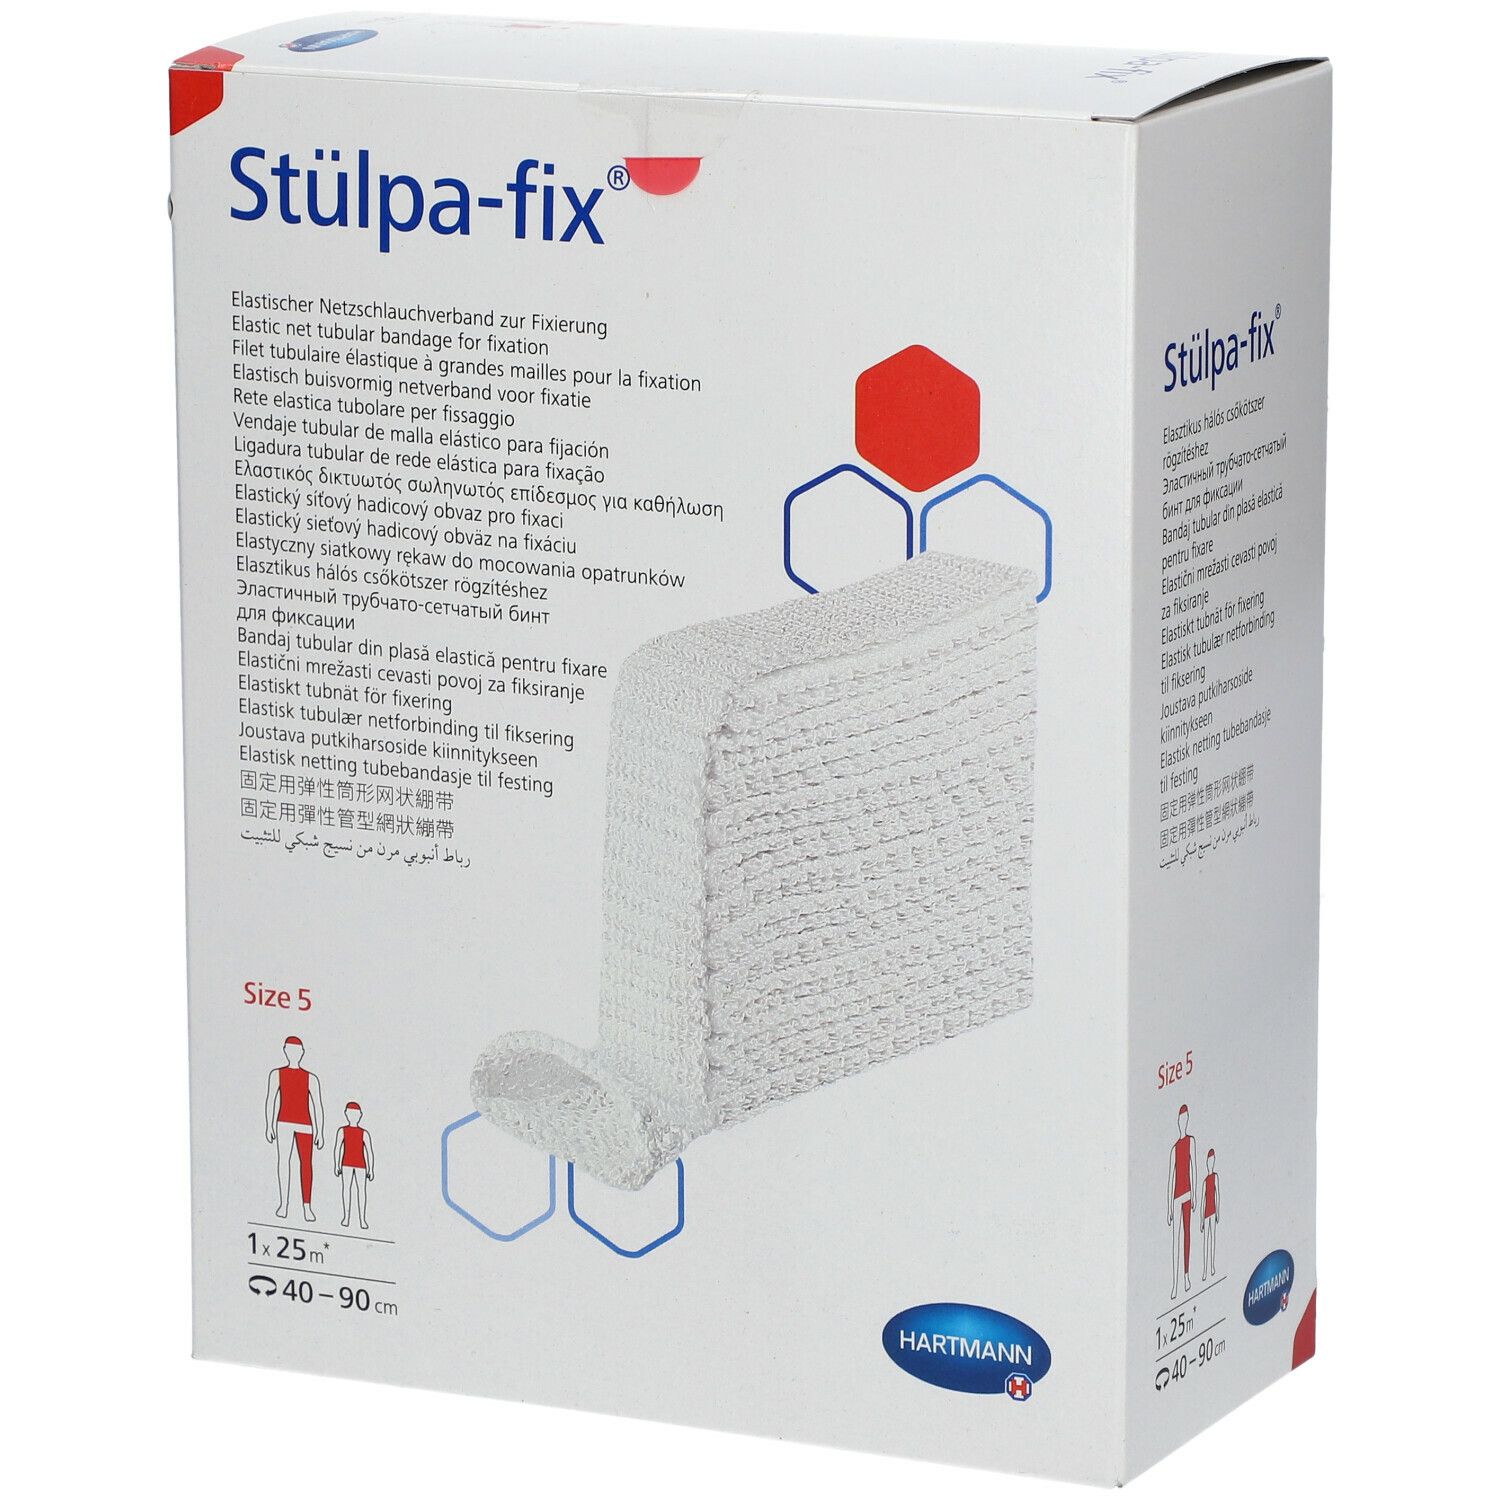 Stülpa®-fix Netzschlauchverband Gr. 5 Kopfverbände, Kinderrumpfverbände